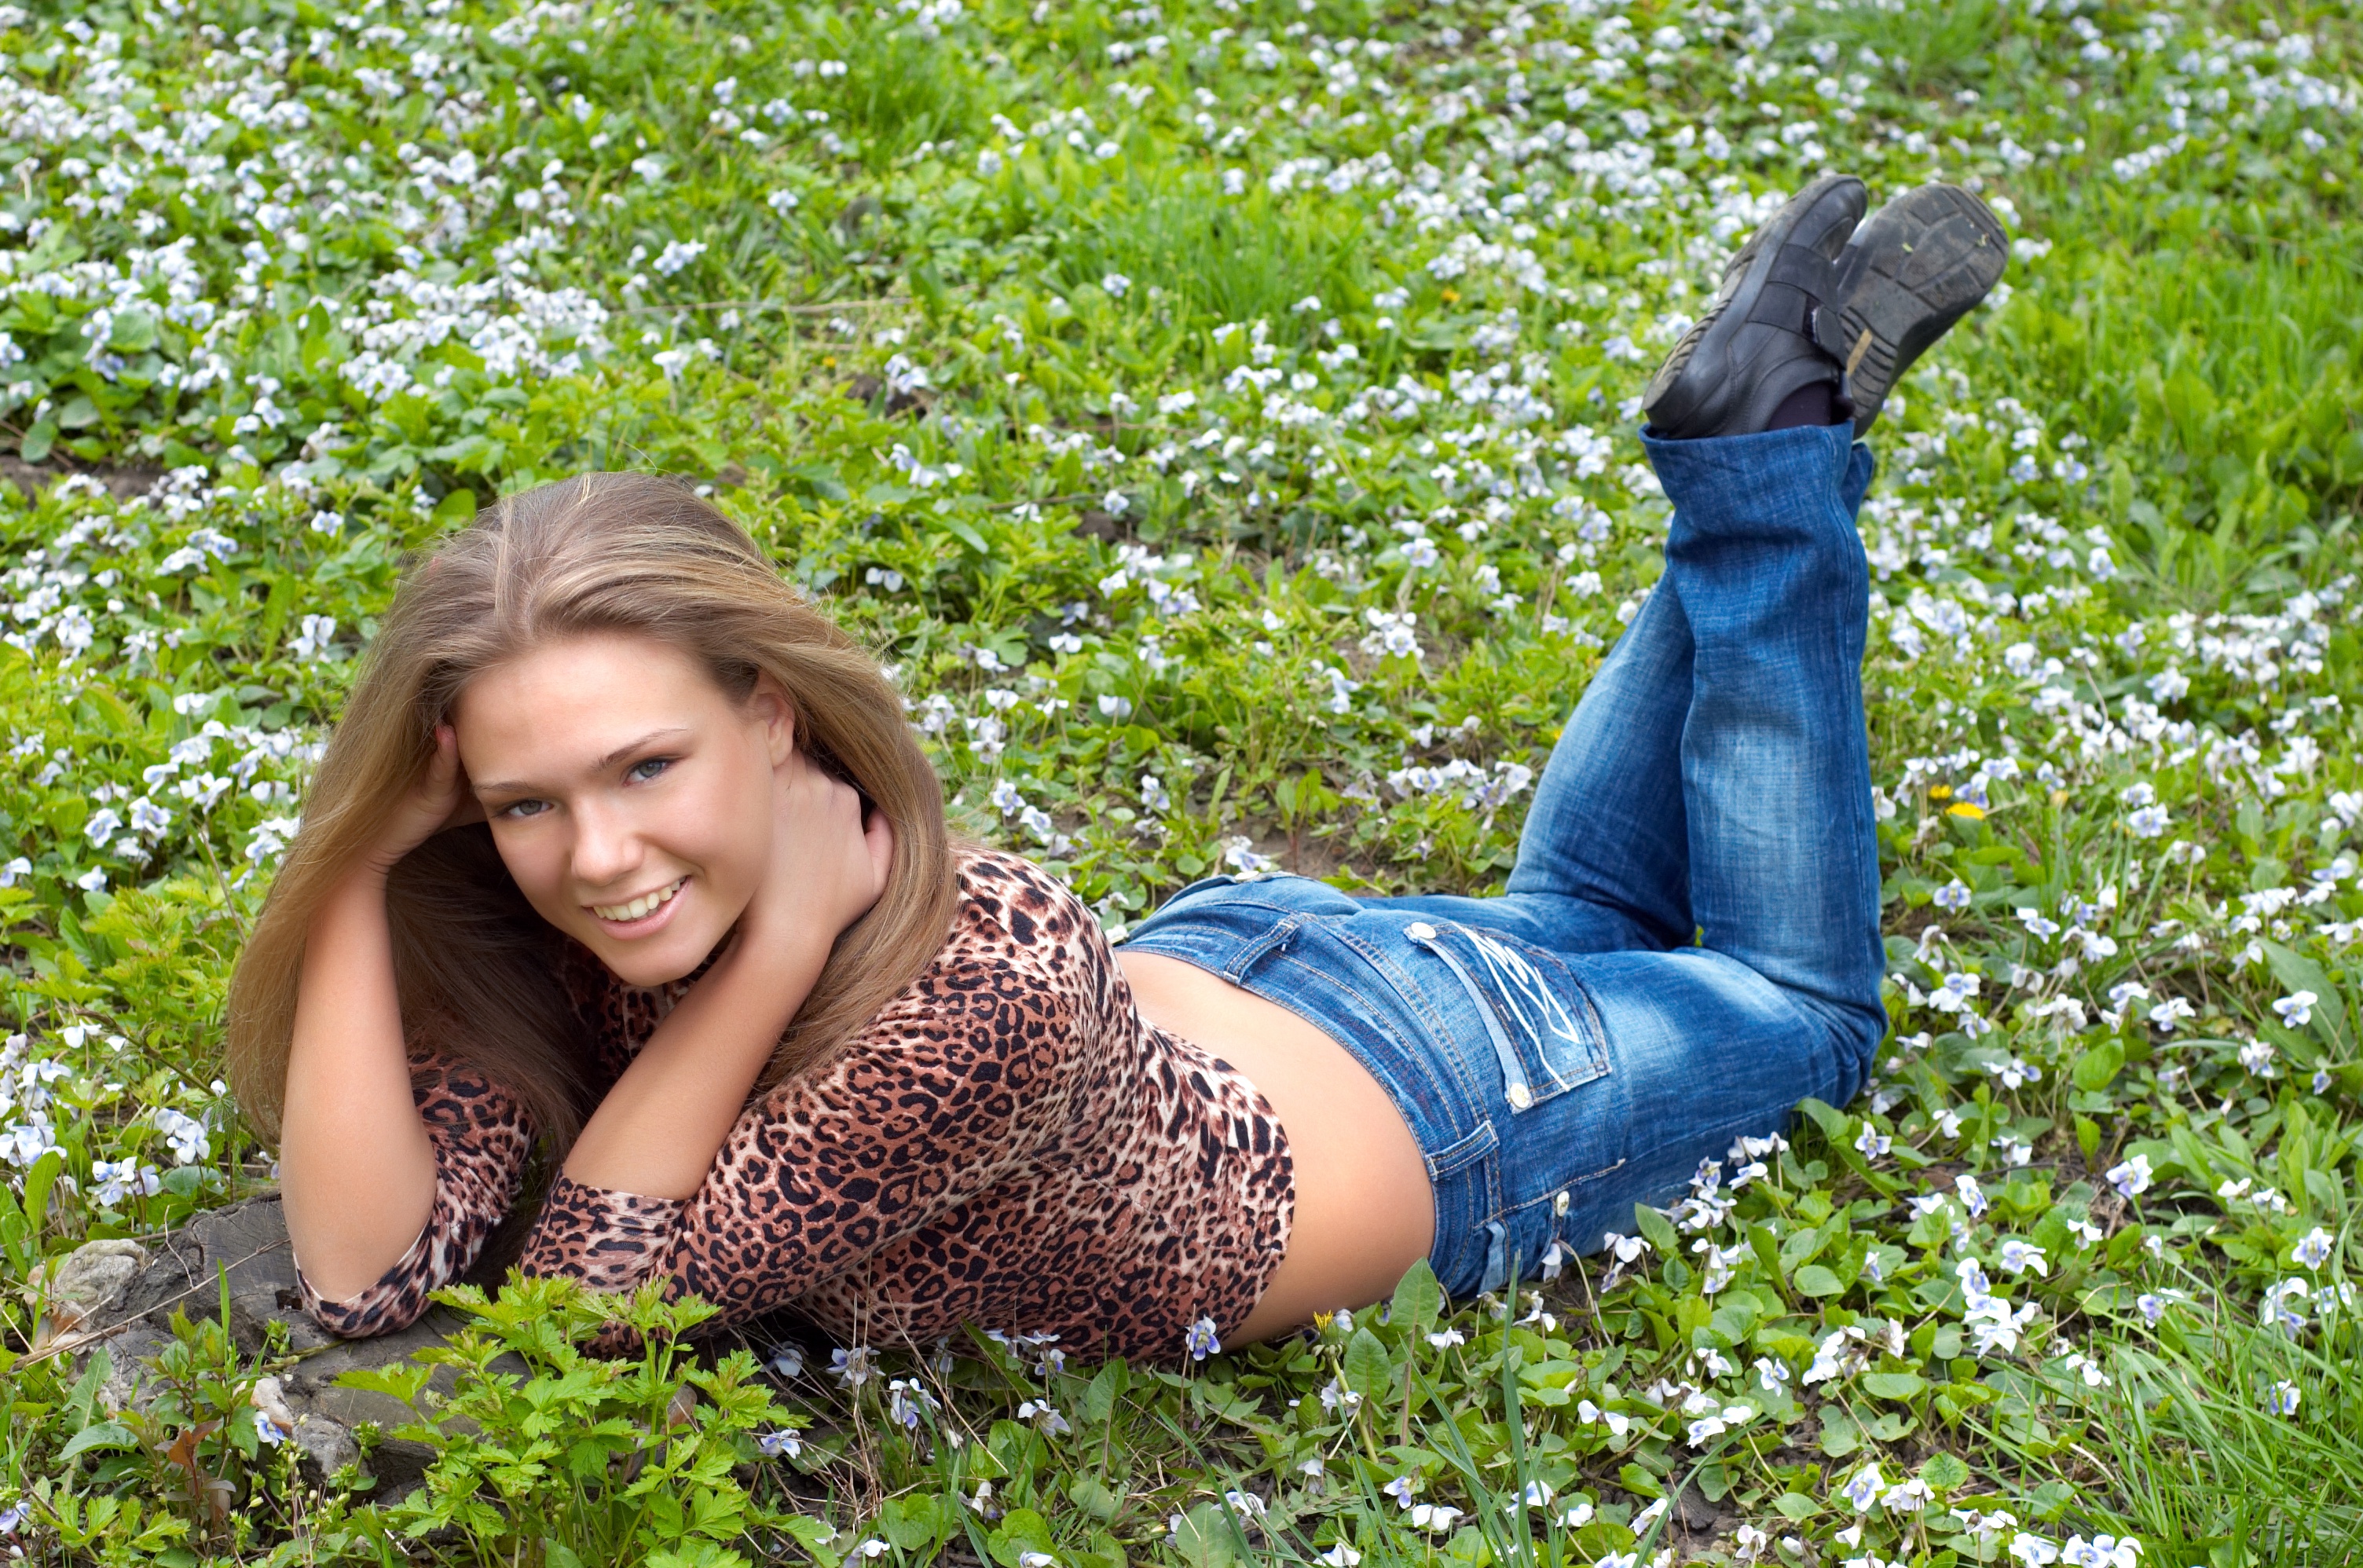 Видео на природе 18. Девушка в джинсах на природе. Календарь с девушками. Девушка в джинсах на траве.